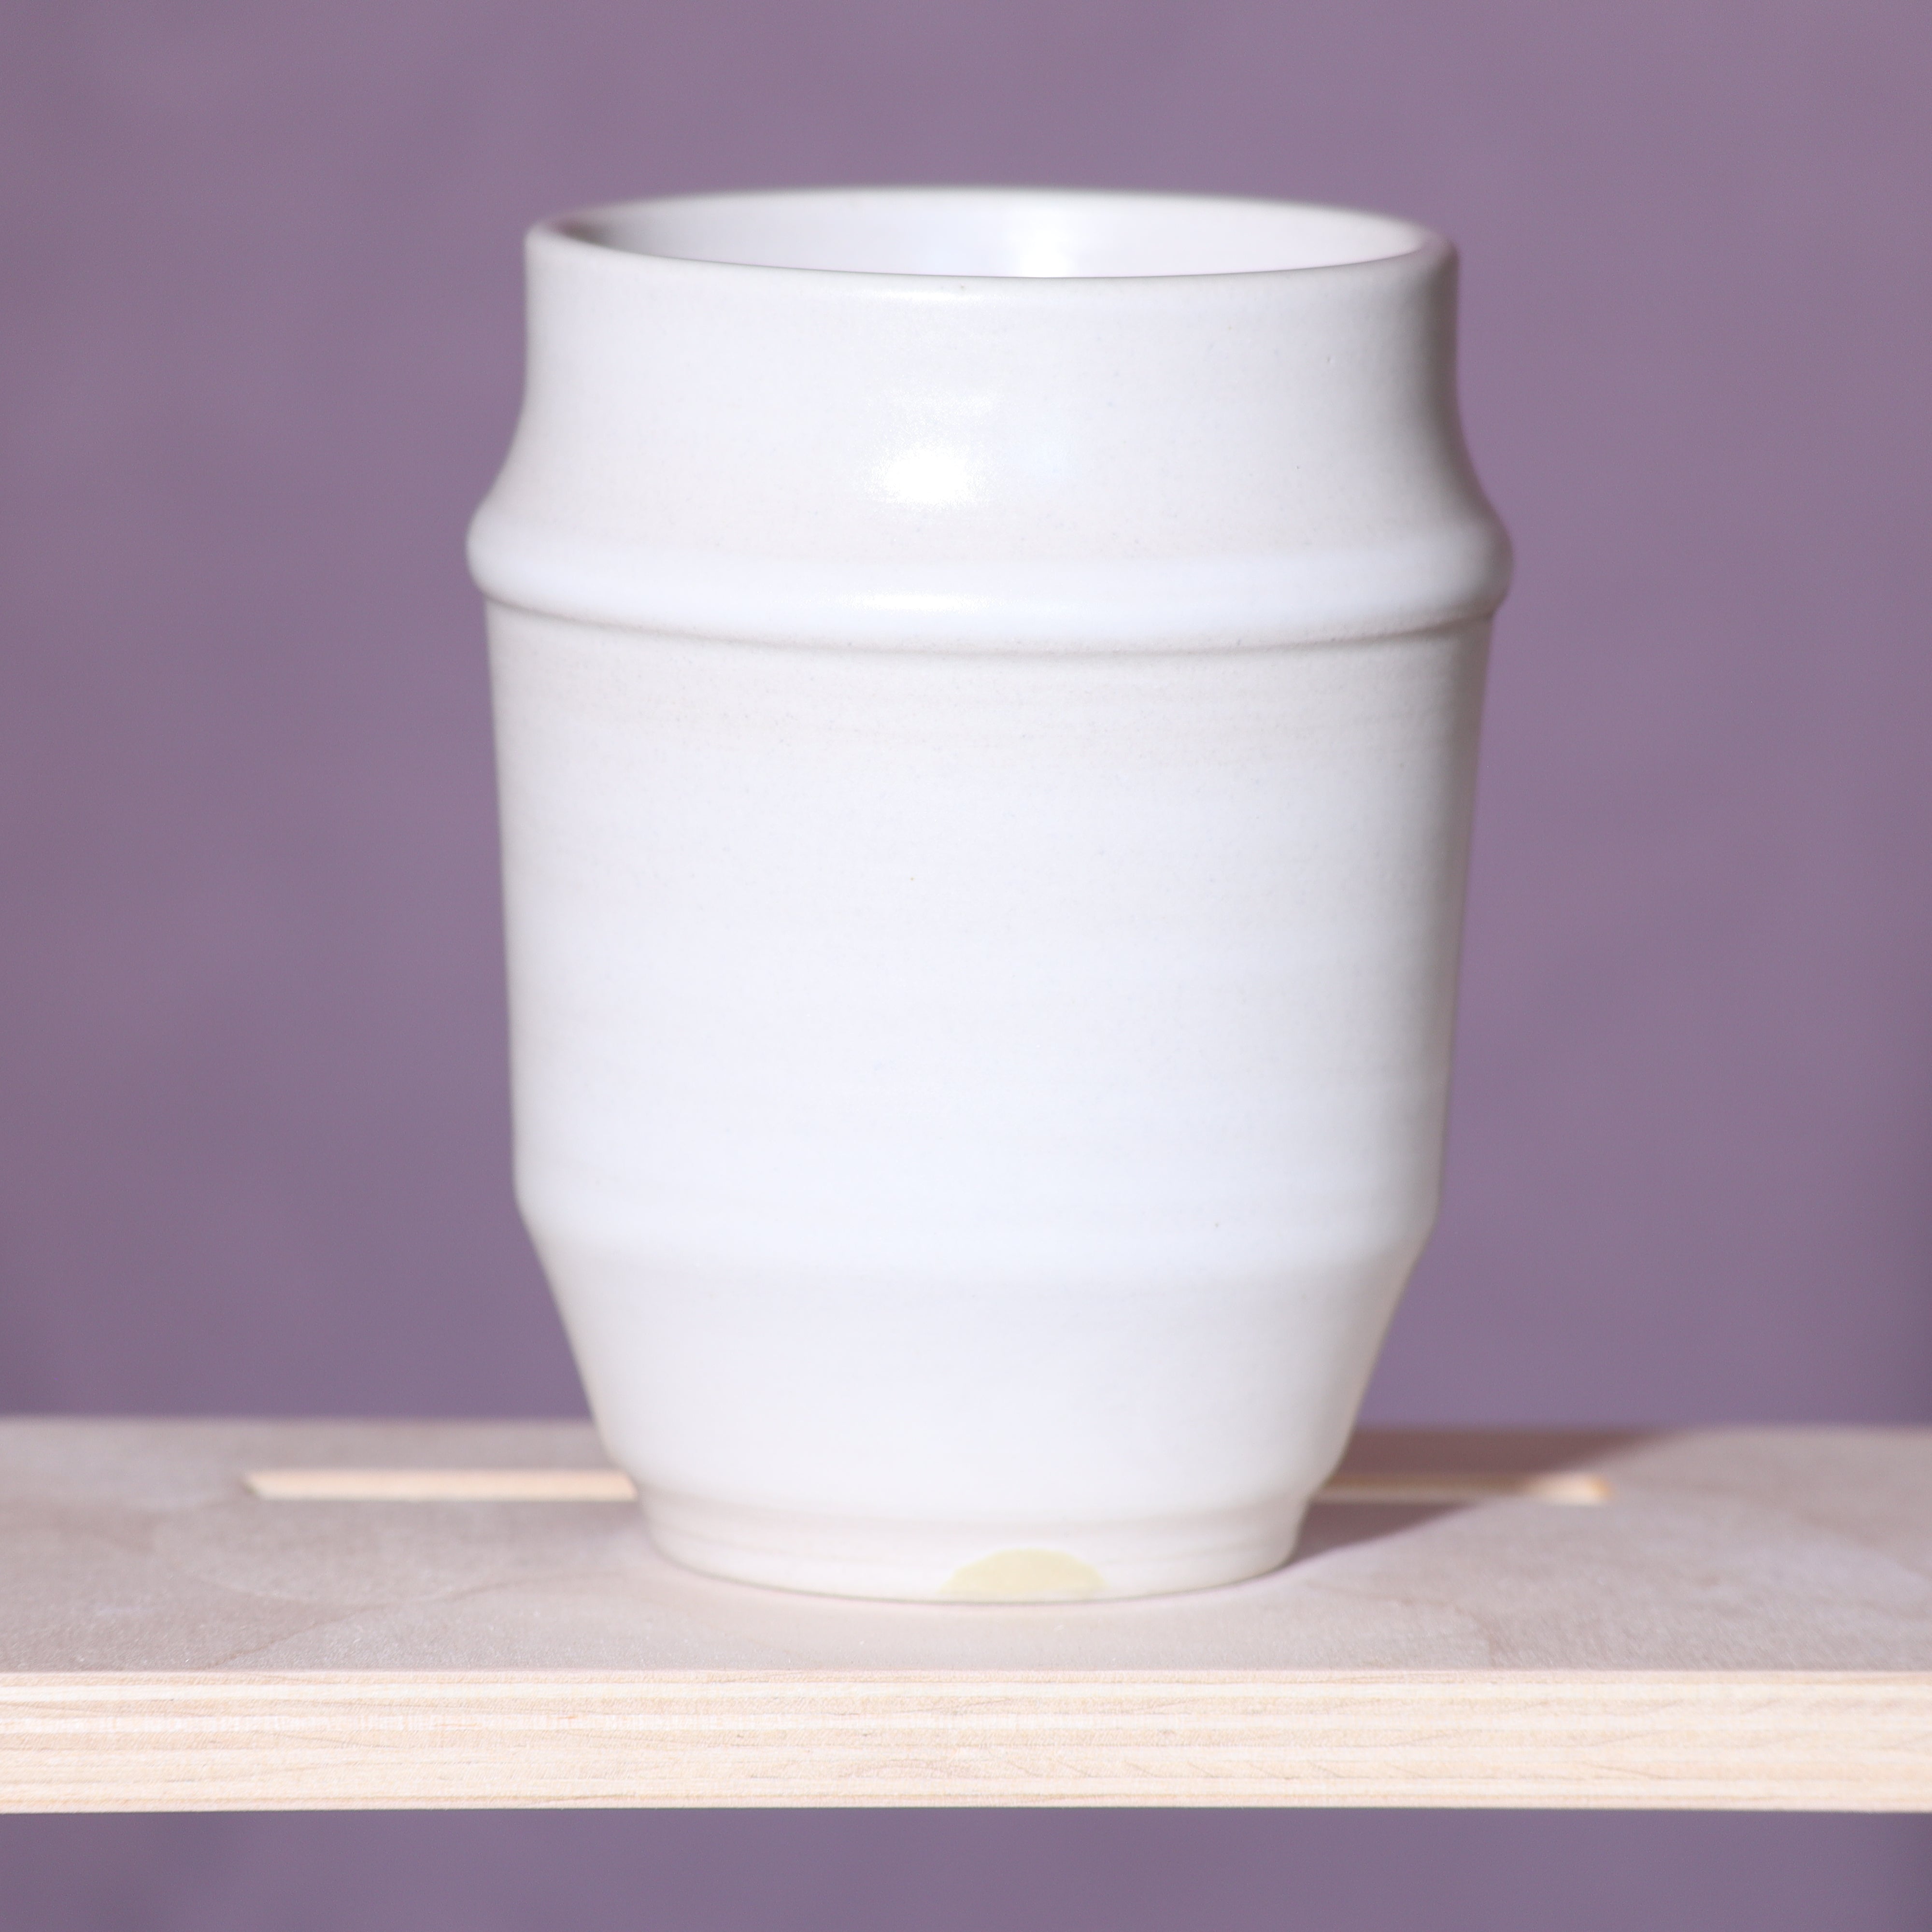 Double Wall Insulated Ceramic Mug 168